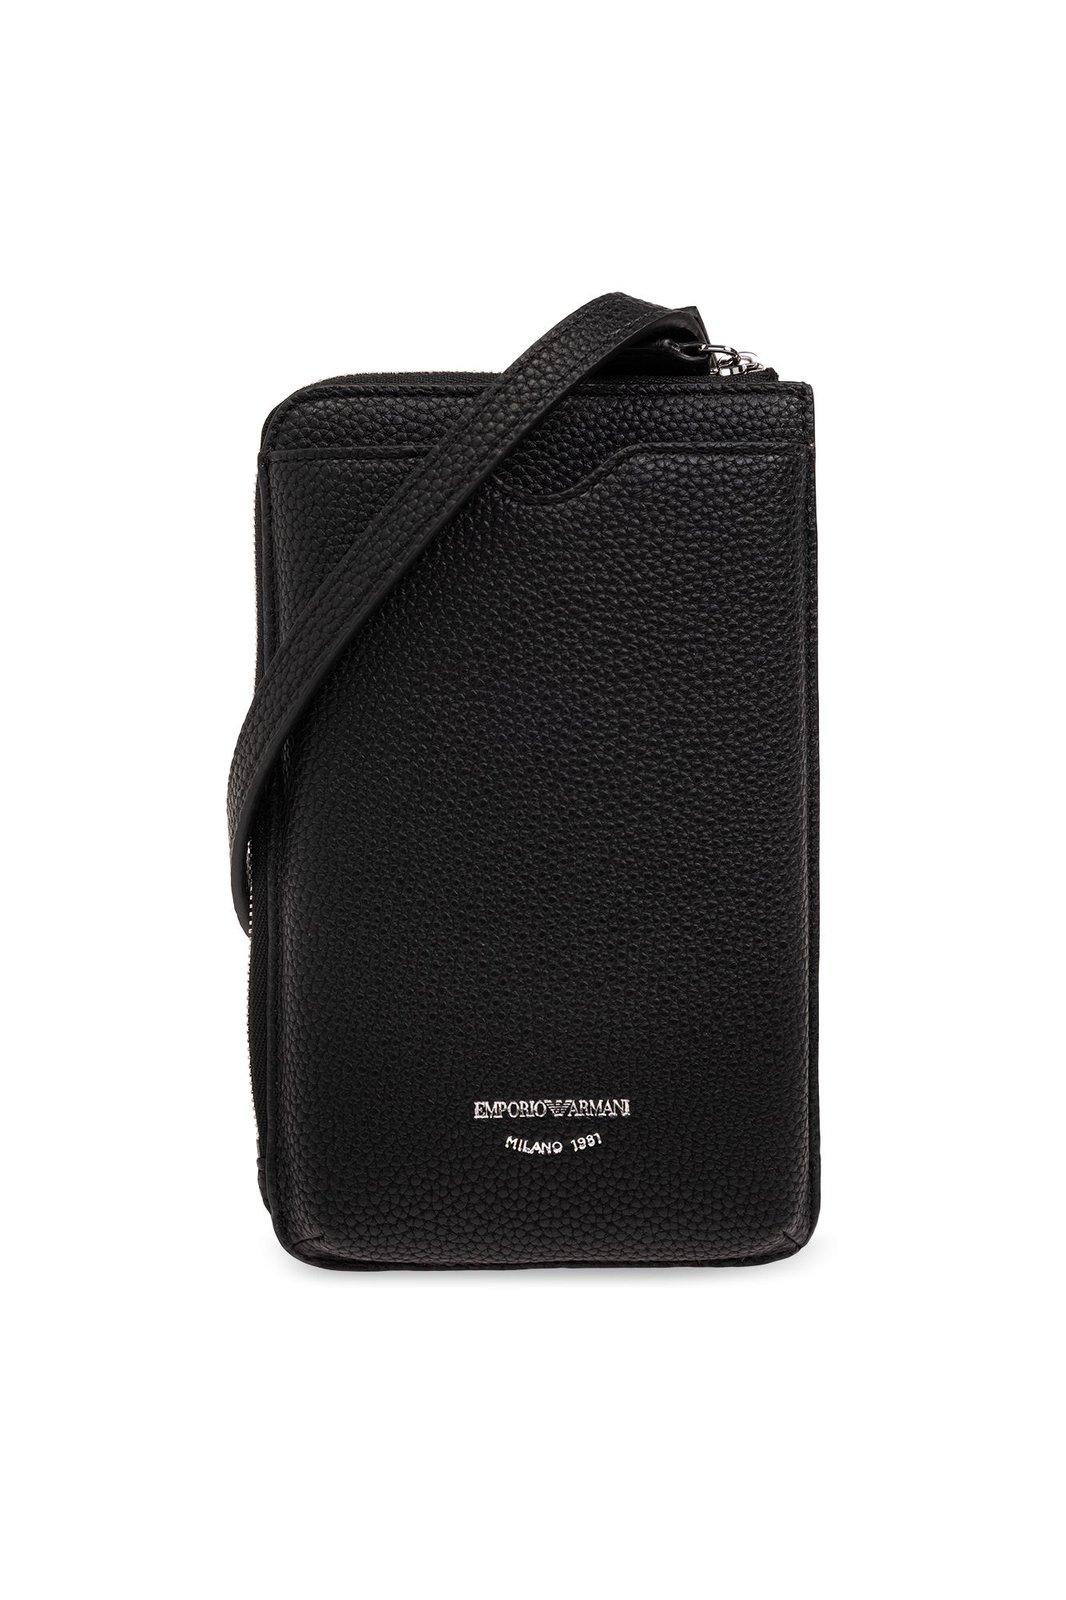 Emporio Armani Strapped Phone Holder - Black - female - Size: 0one size